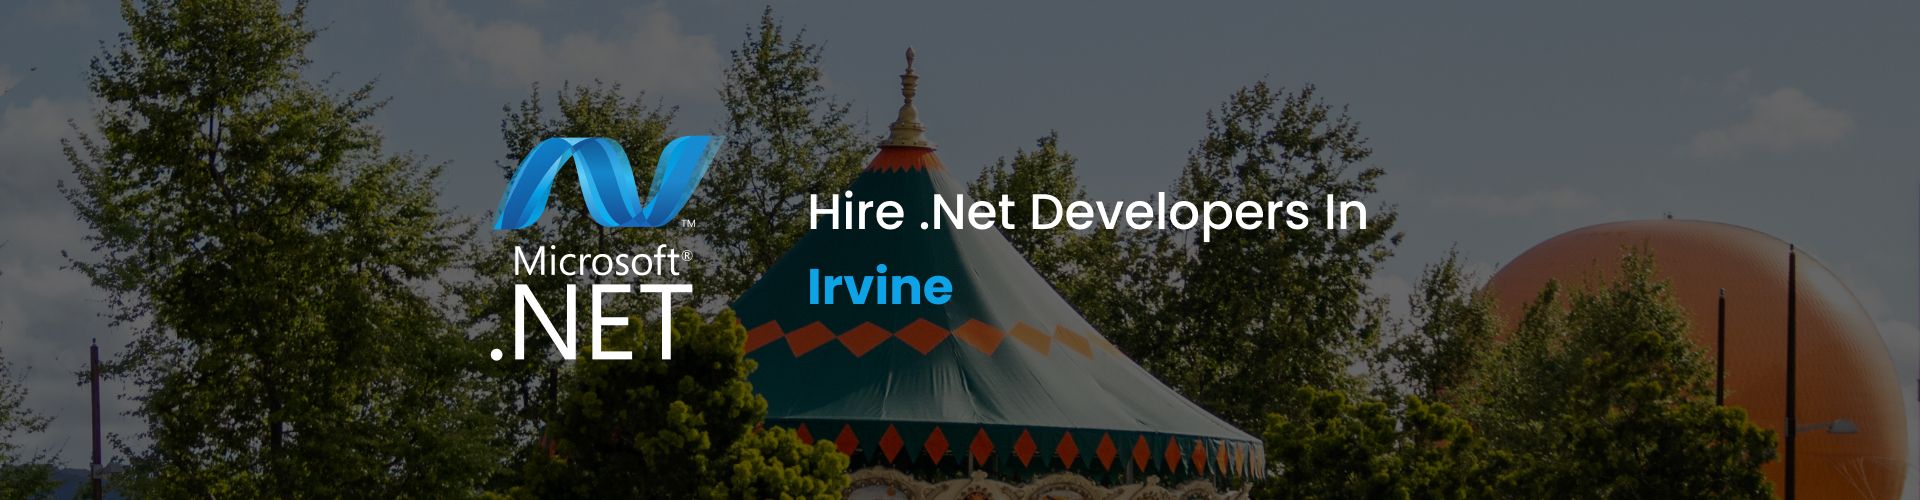 hire .net developers in irvine